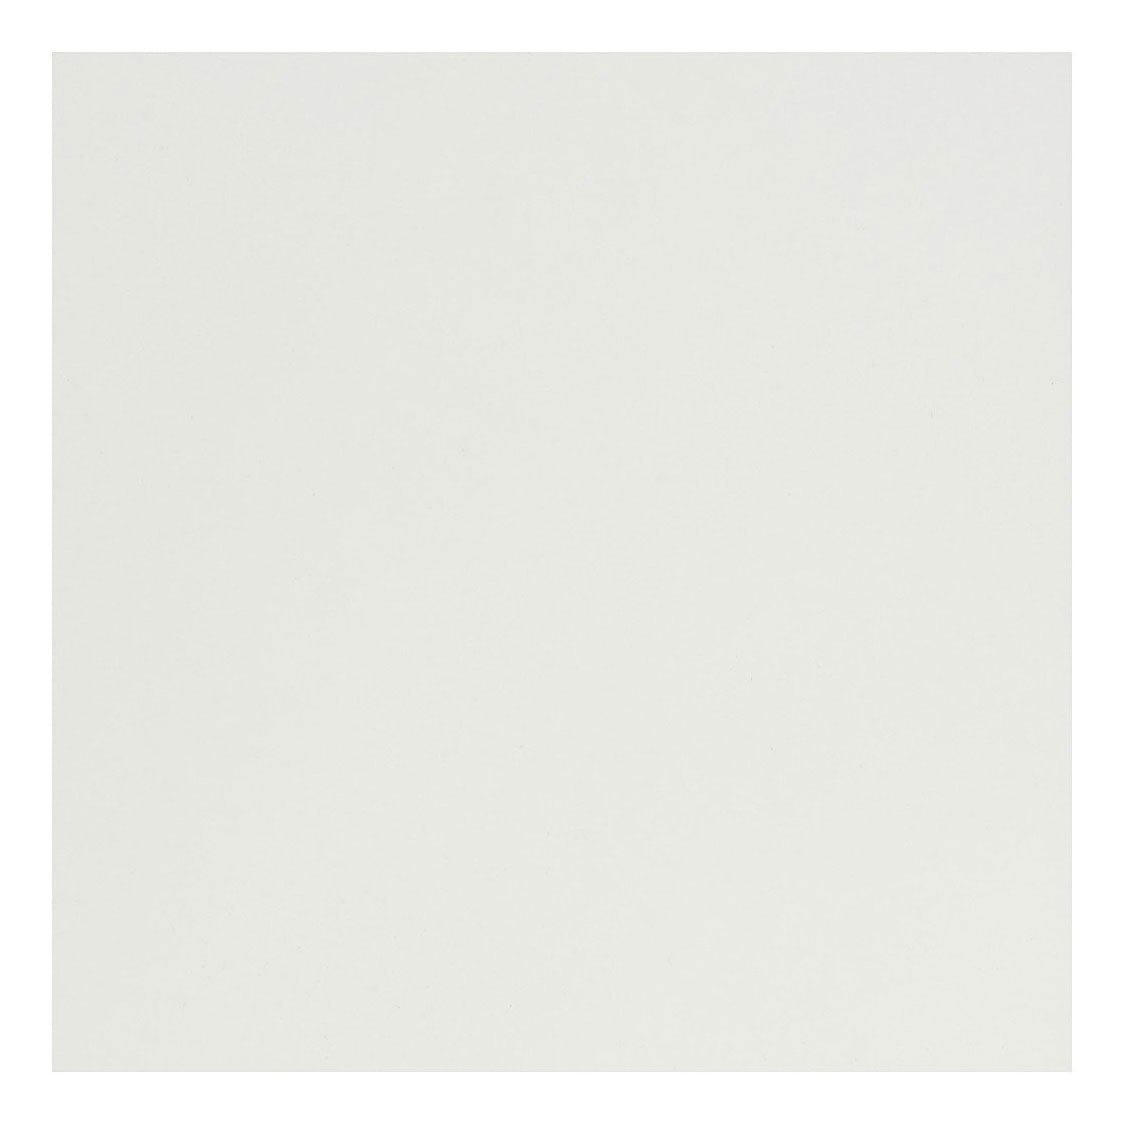 Creativ Company Vellumpapier A4 Off-white, 10 Vellen